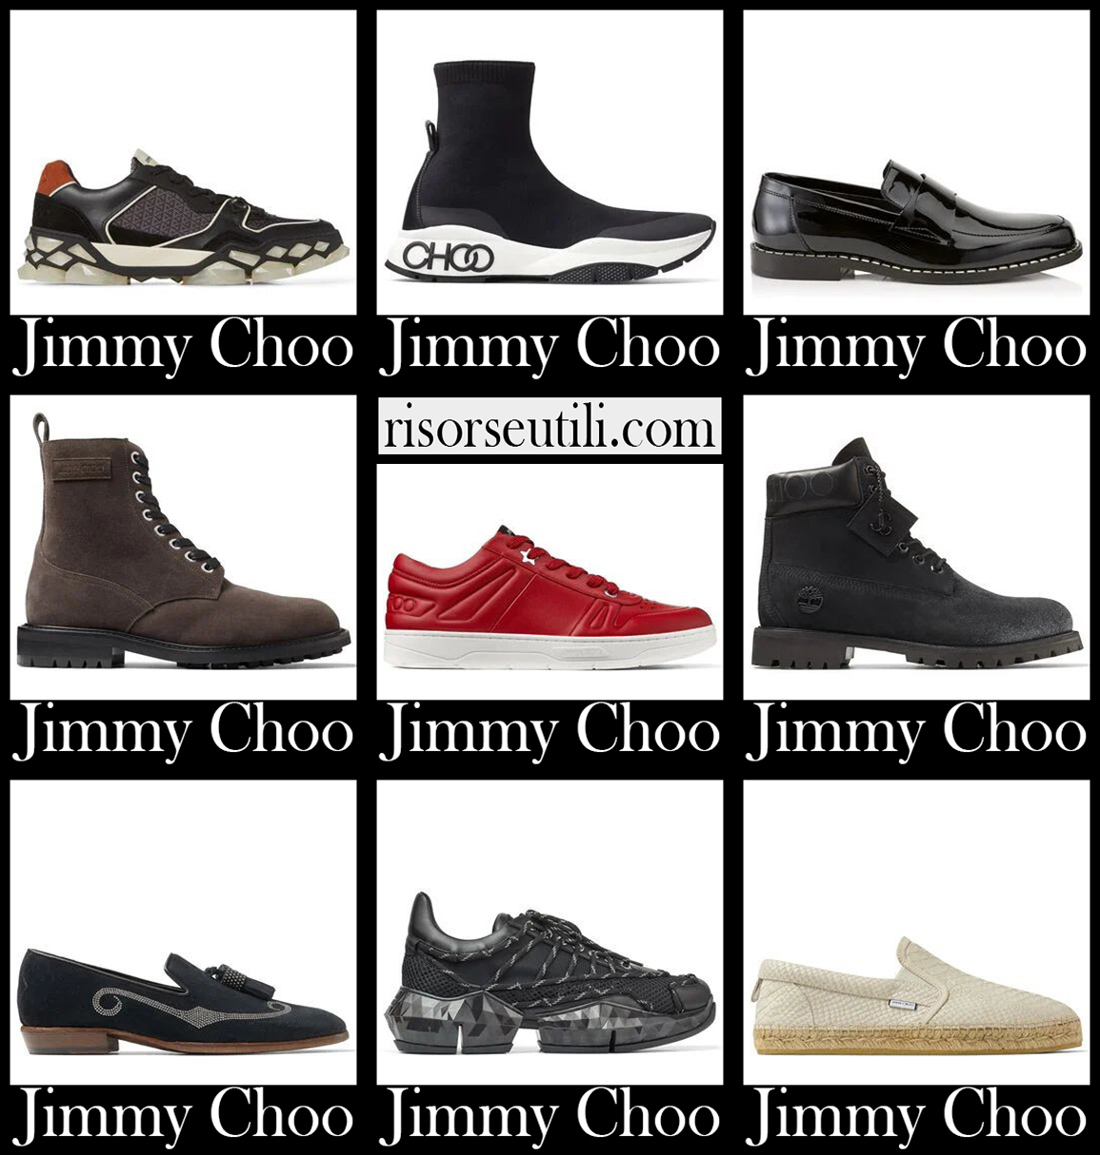 New arrivals Jimmy Choo shoes 2021 mens footwear